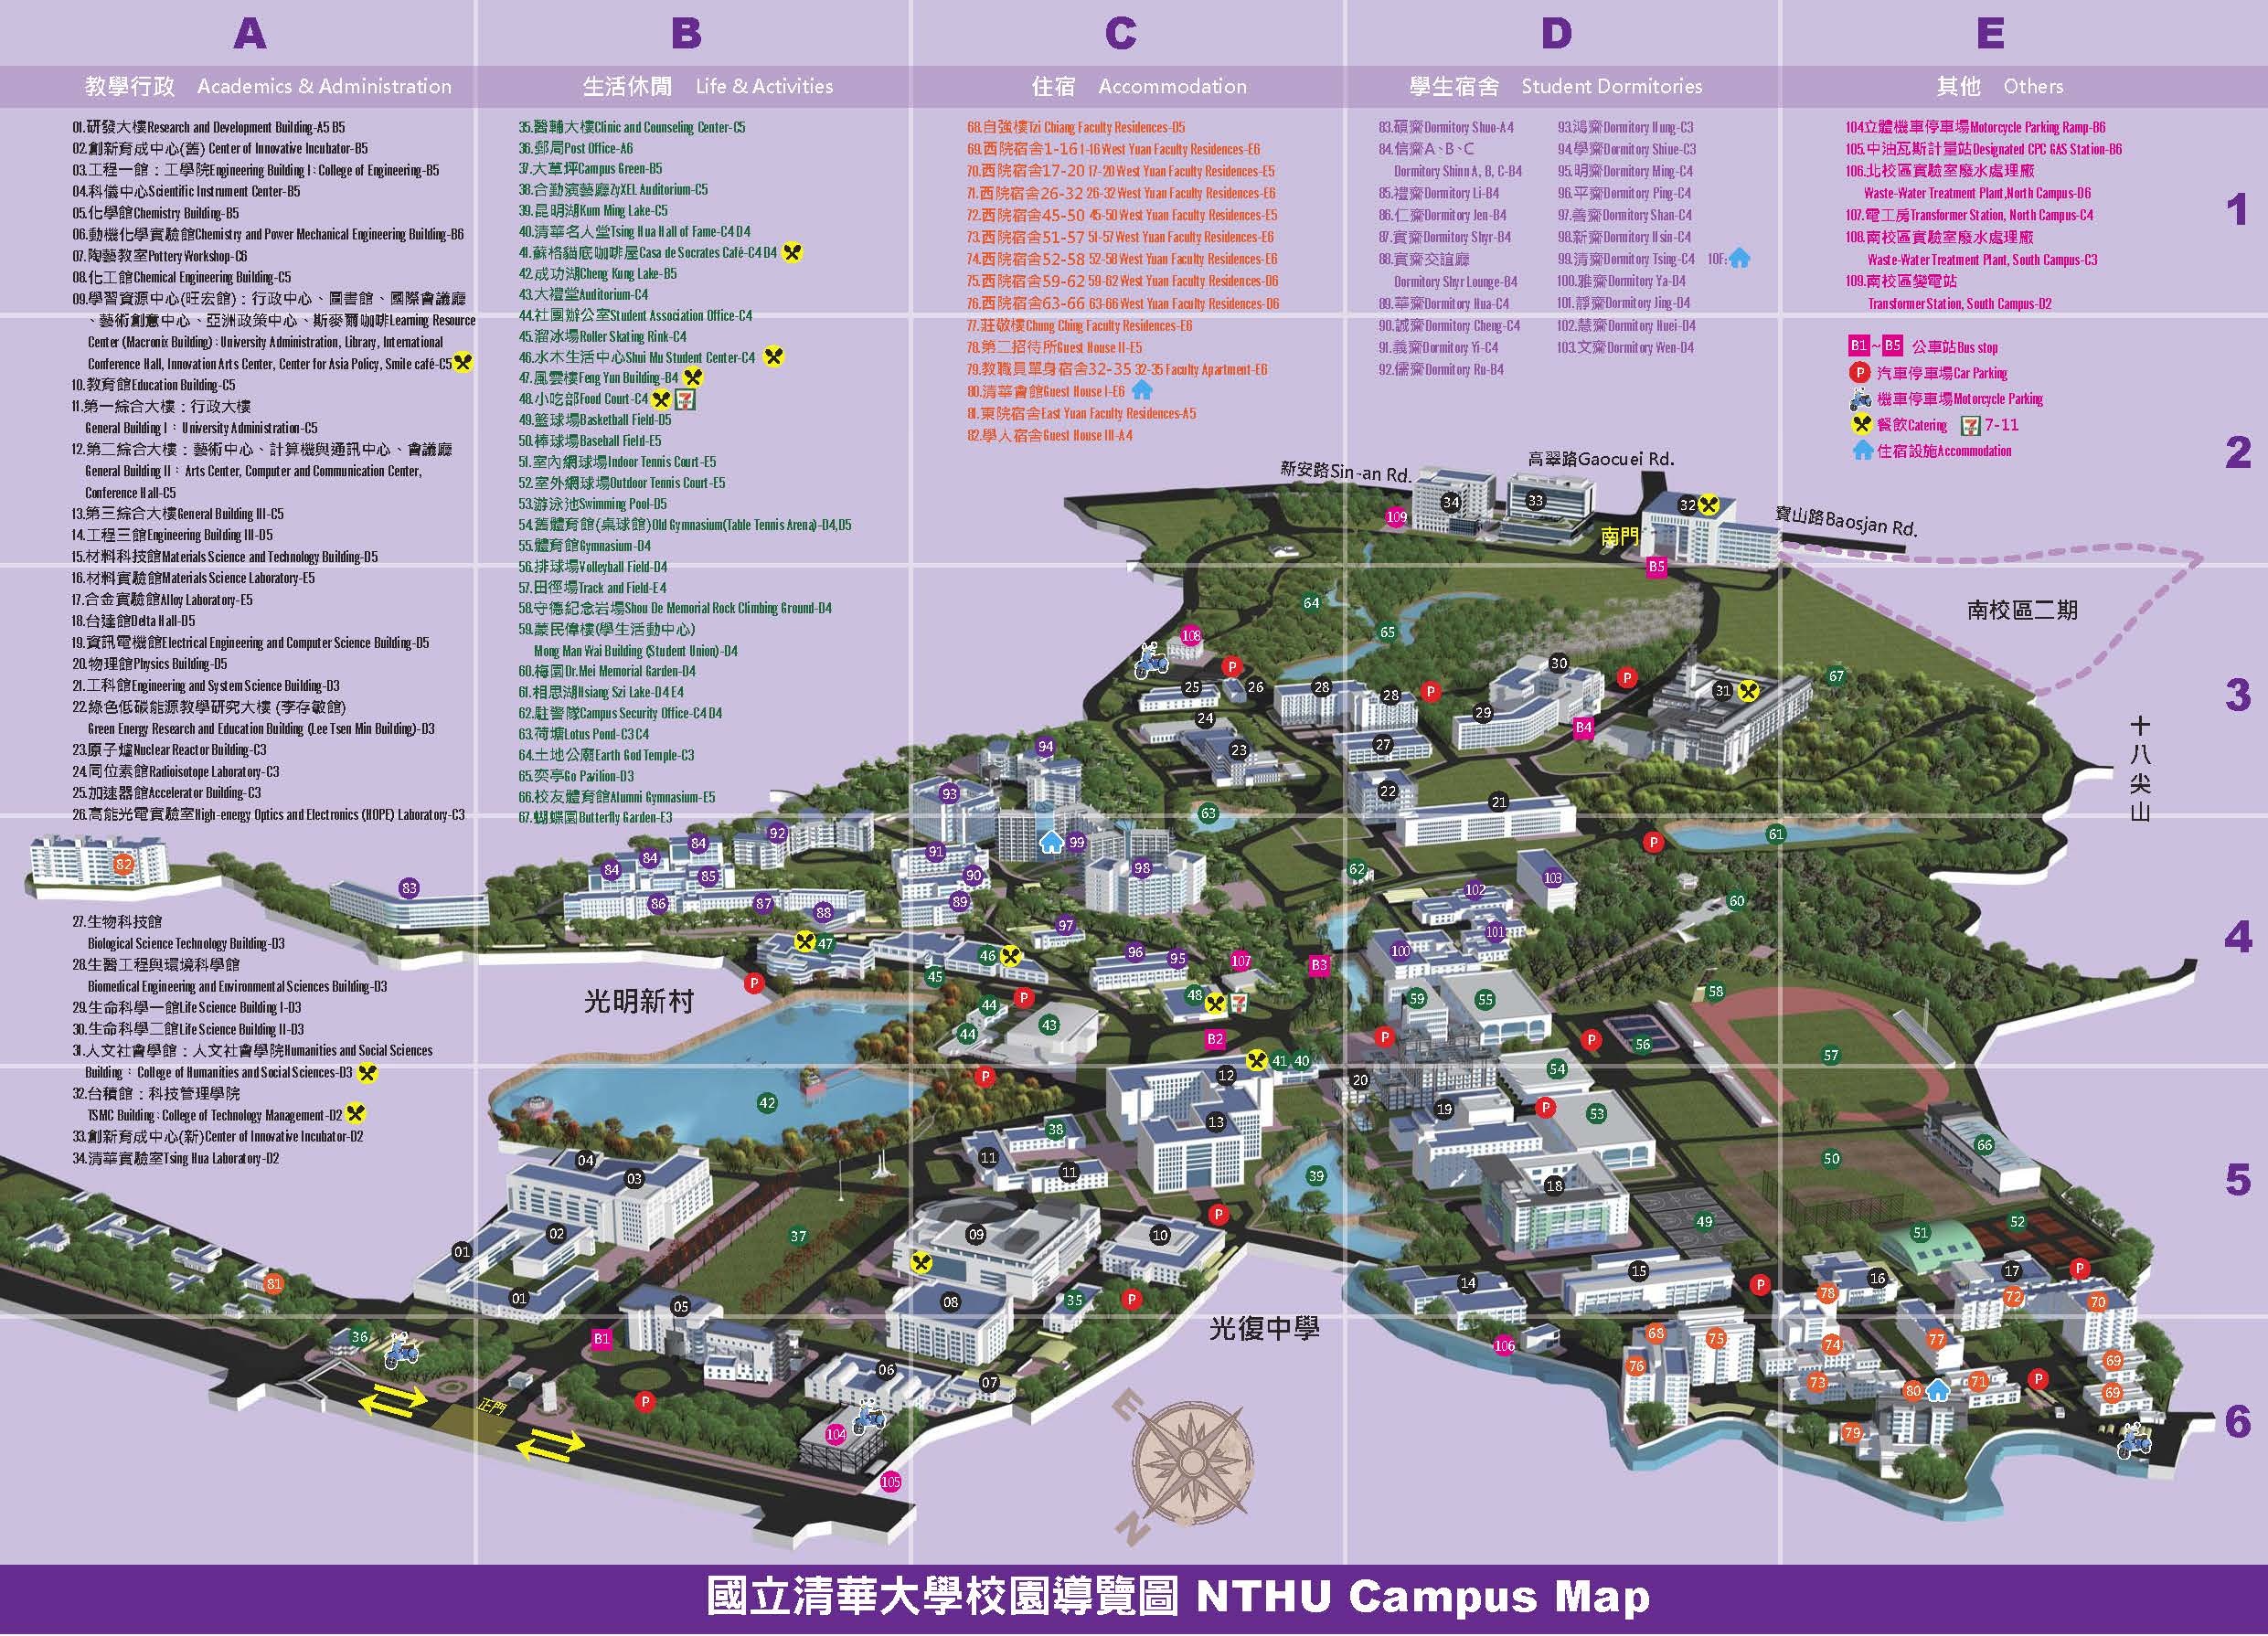 NTHU Campus Map